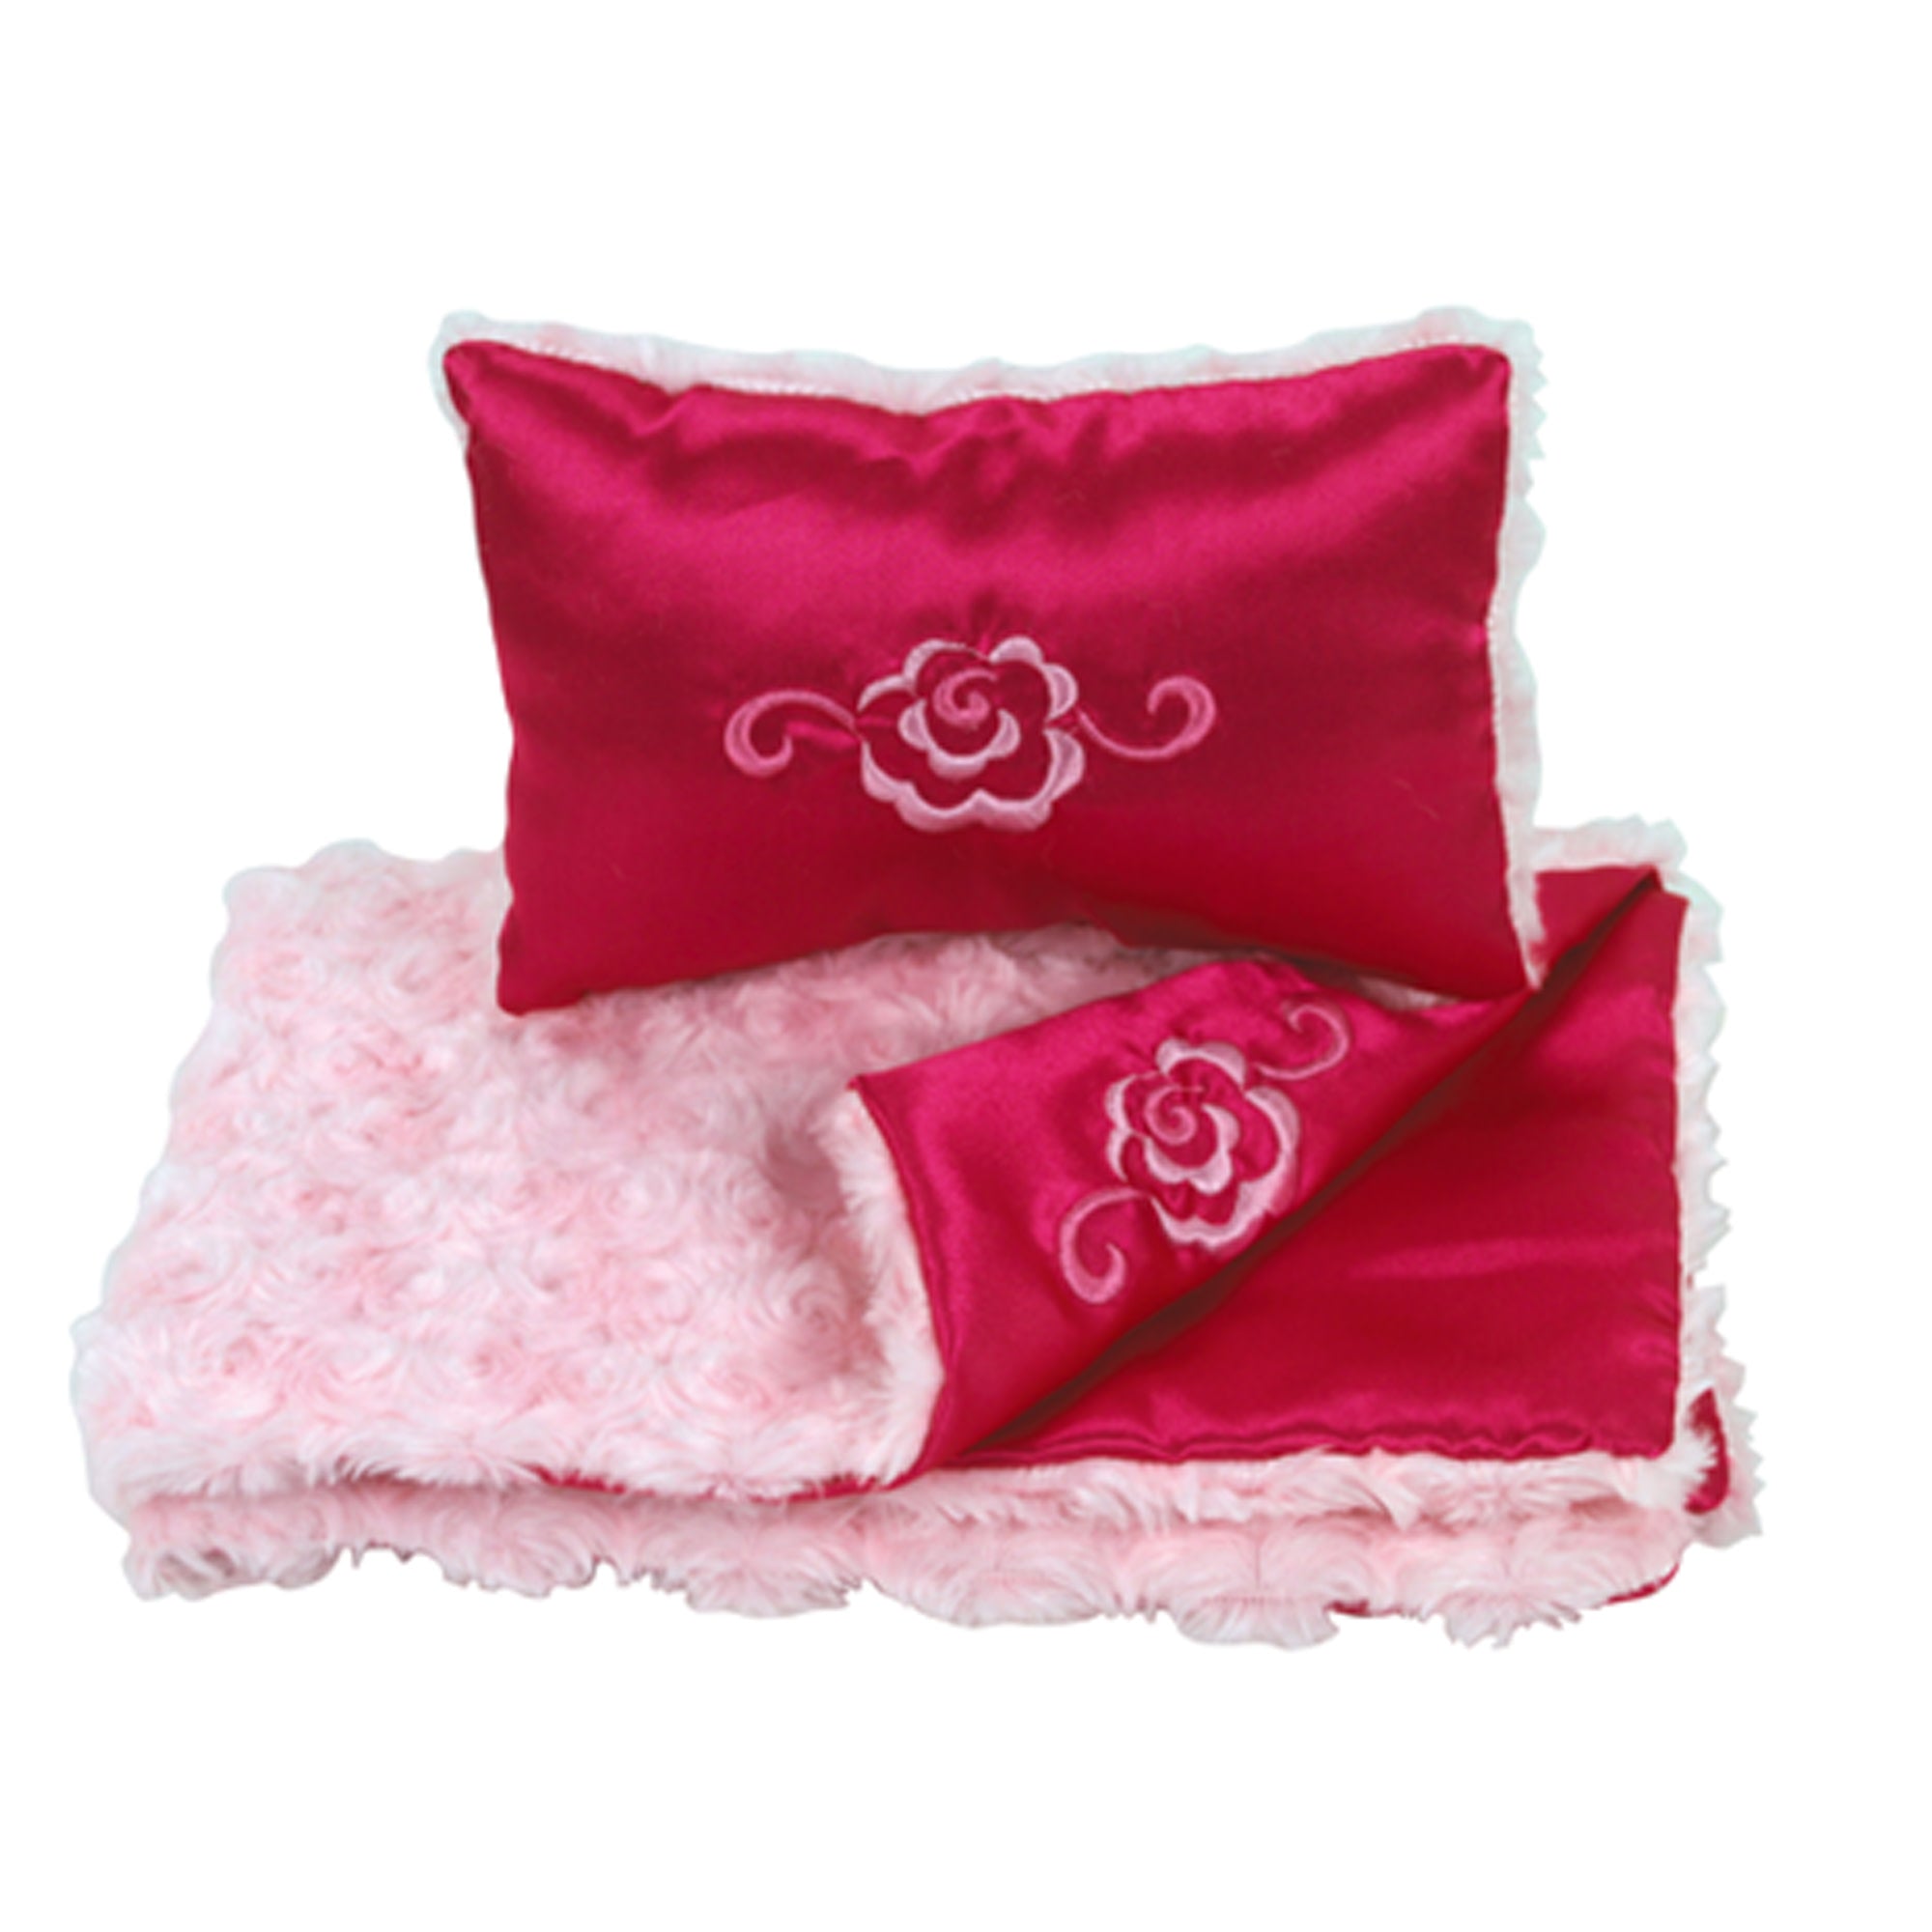 Sophia’s Luxuriously Soft Satin & Faux Fur Fleece Comforter & Pillow Doll Bedroom Décor Bedding Set for 18” Dolls, Hot Pink/Pink Rose